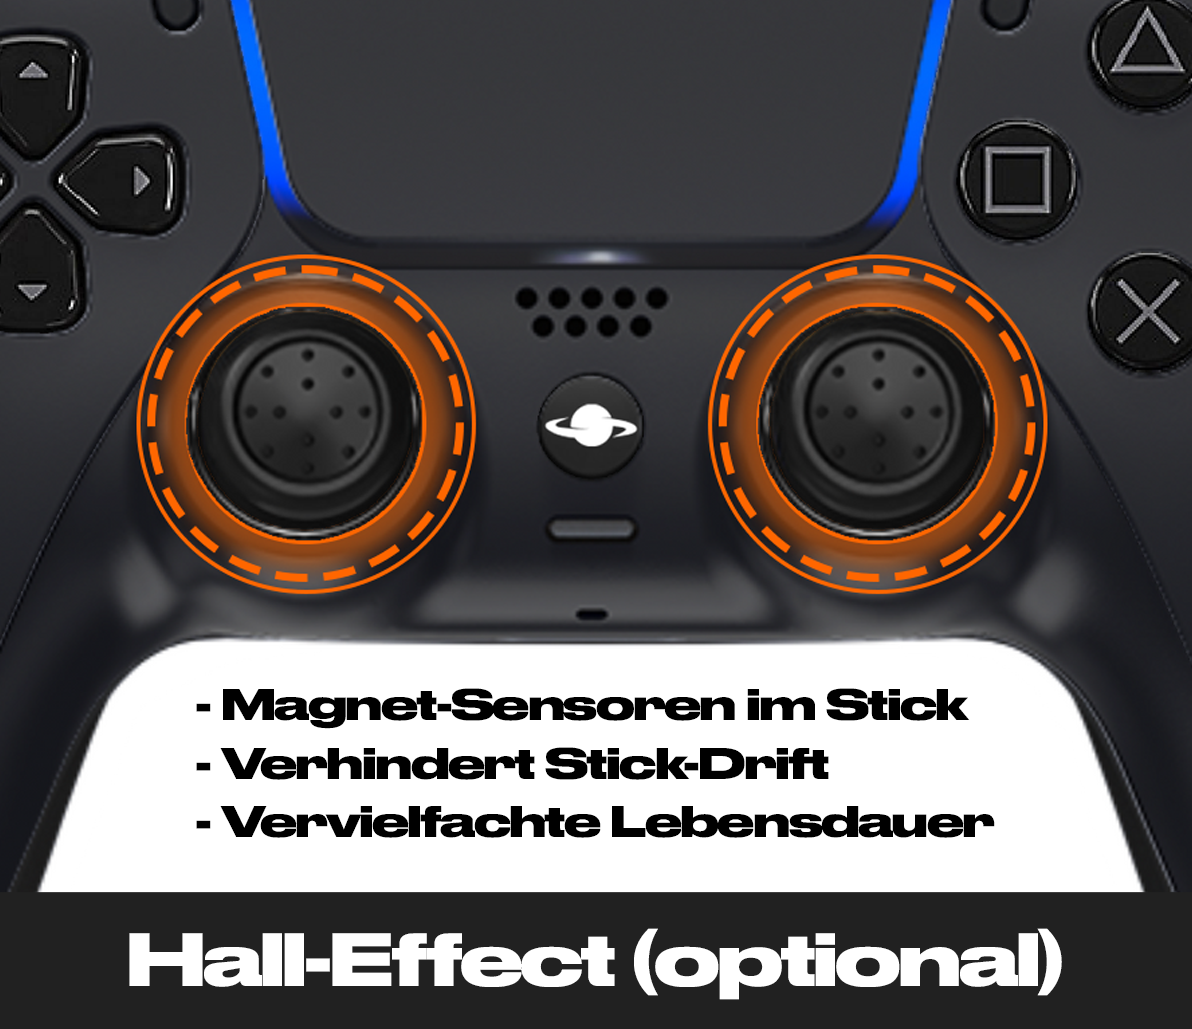 PS5 Custom Controller 'Marble Black'